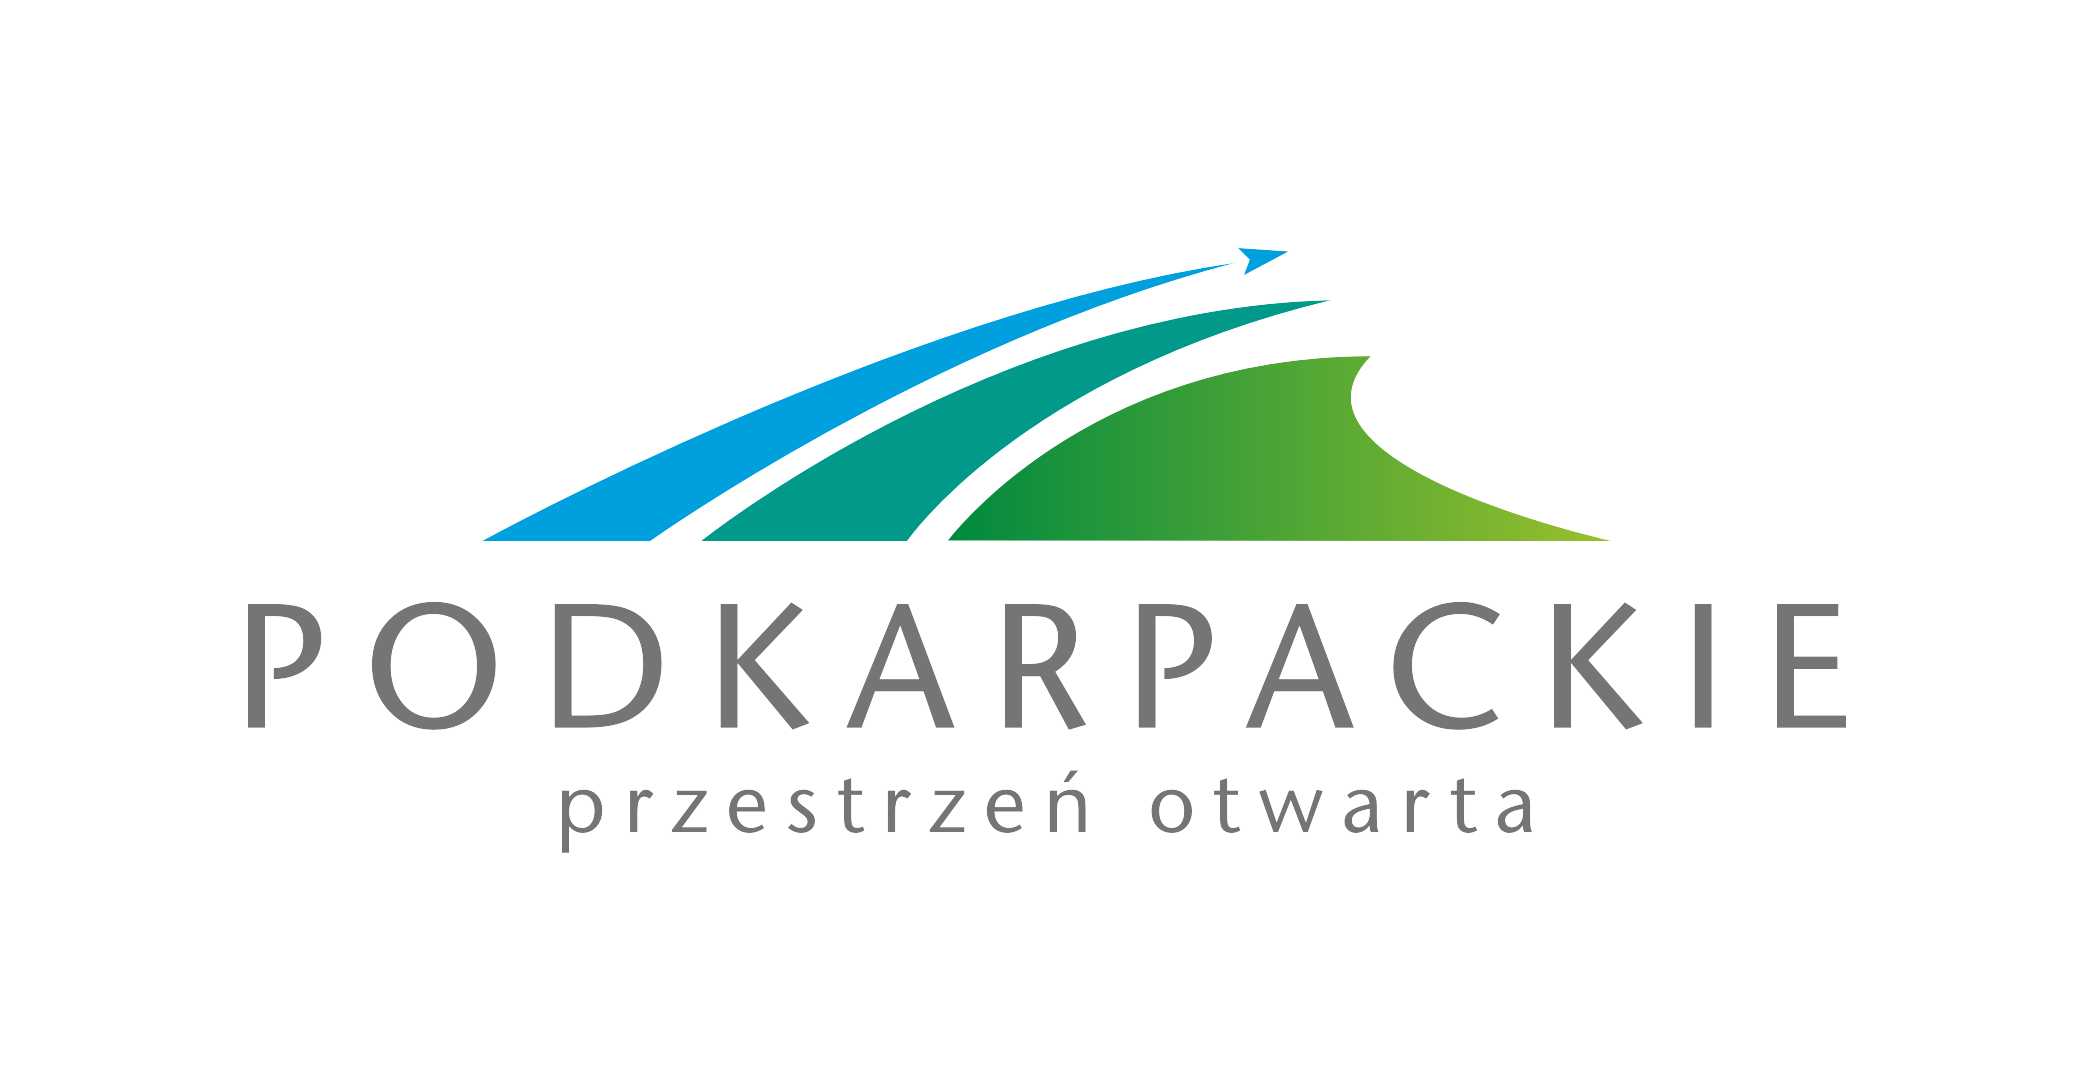 podkarpackie logo